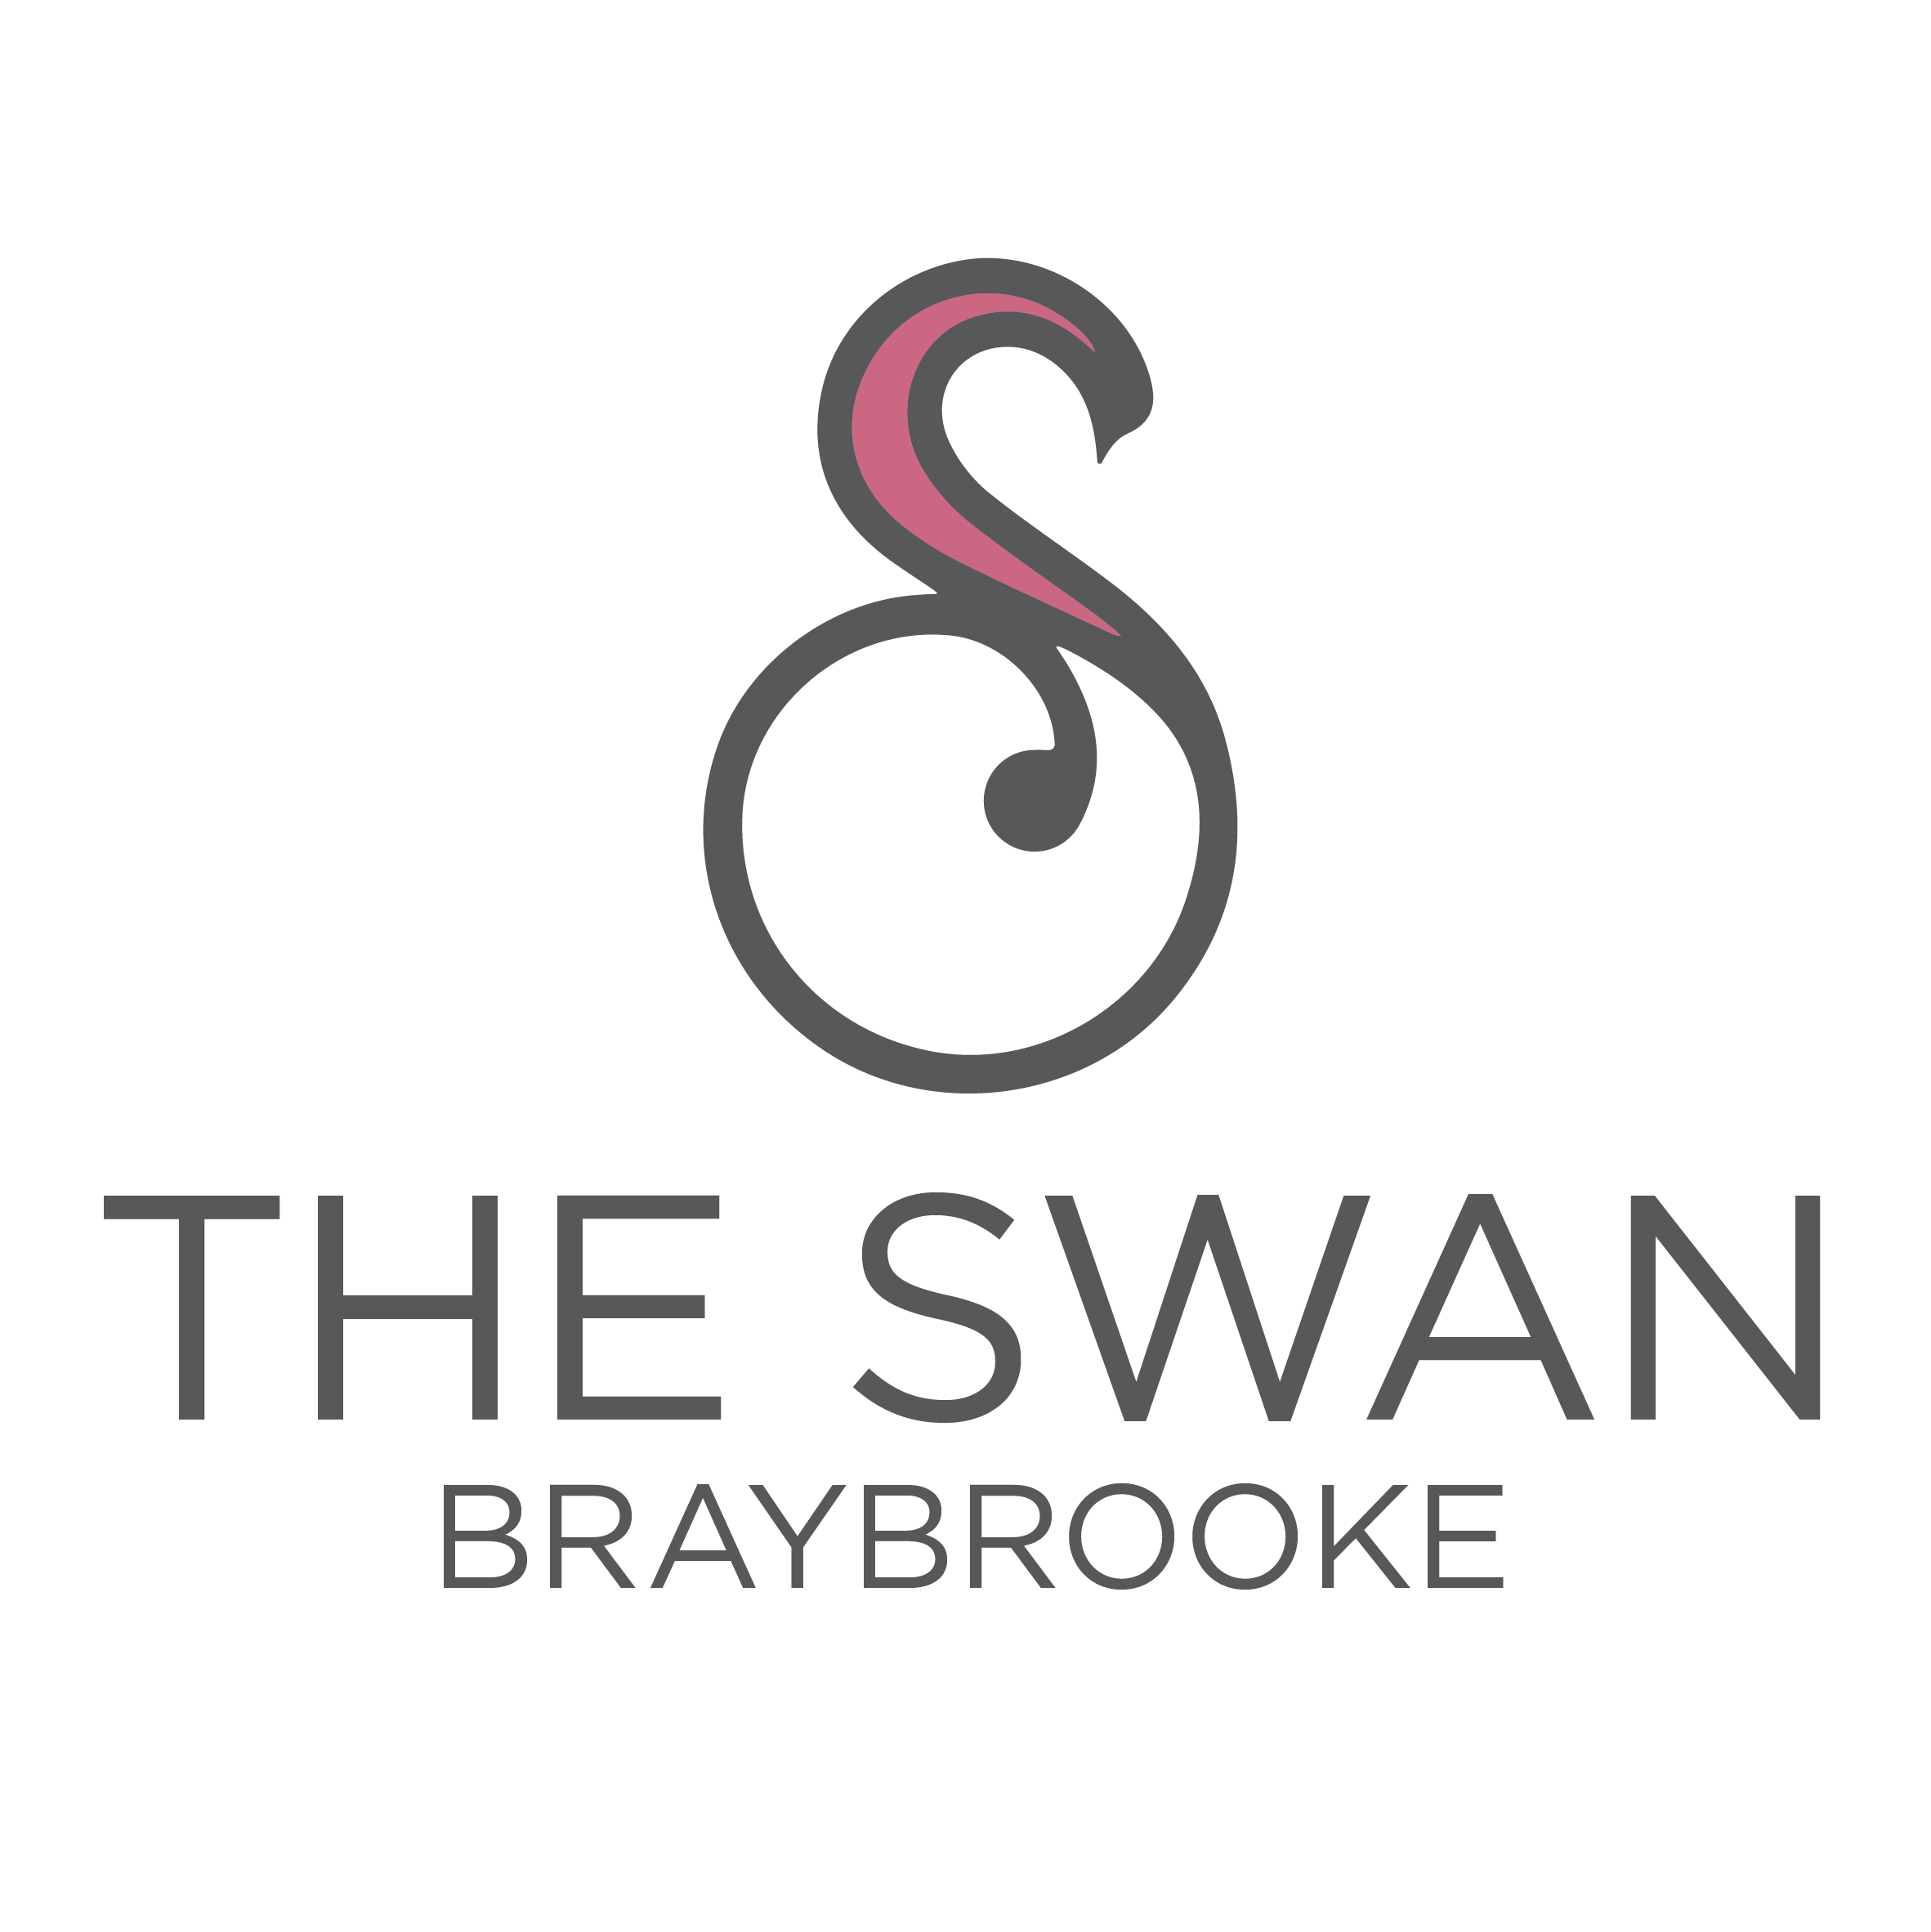 THE SWAN, BRAYBROOKE